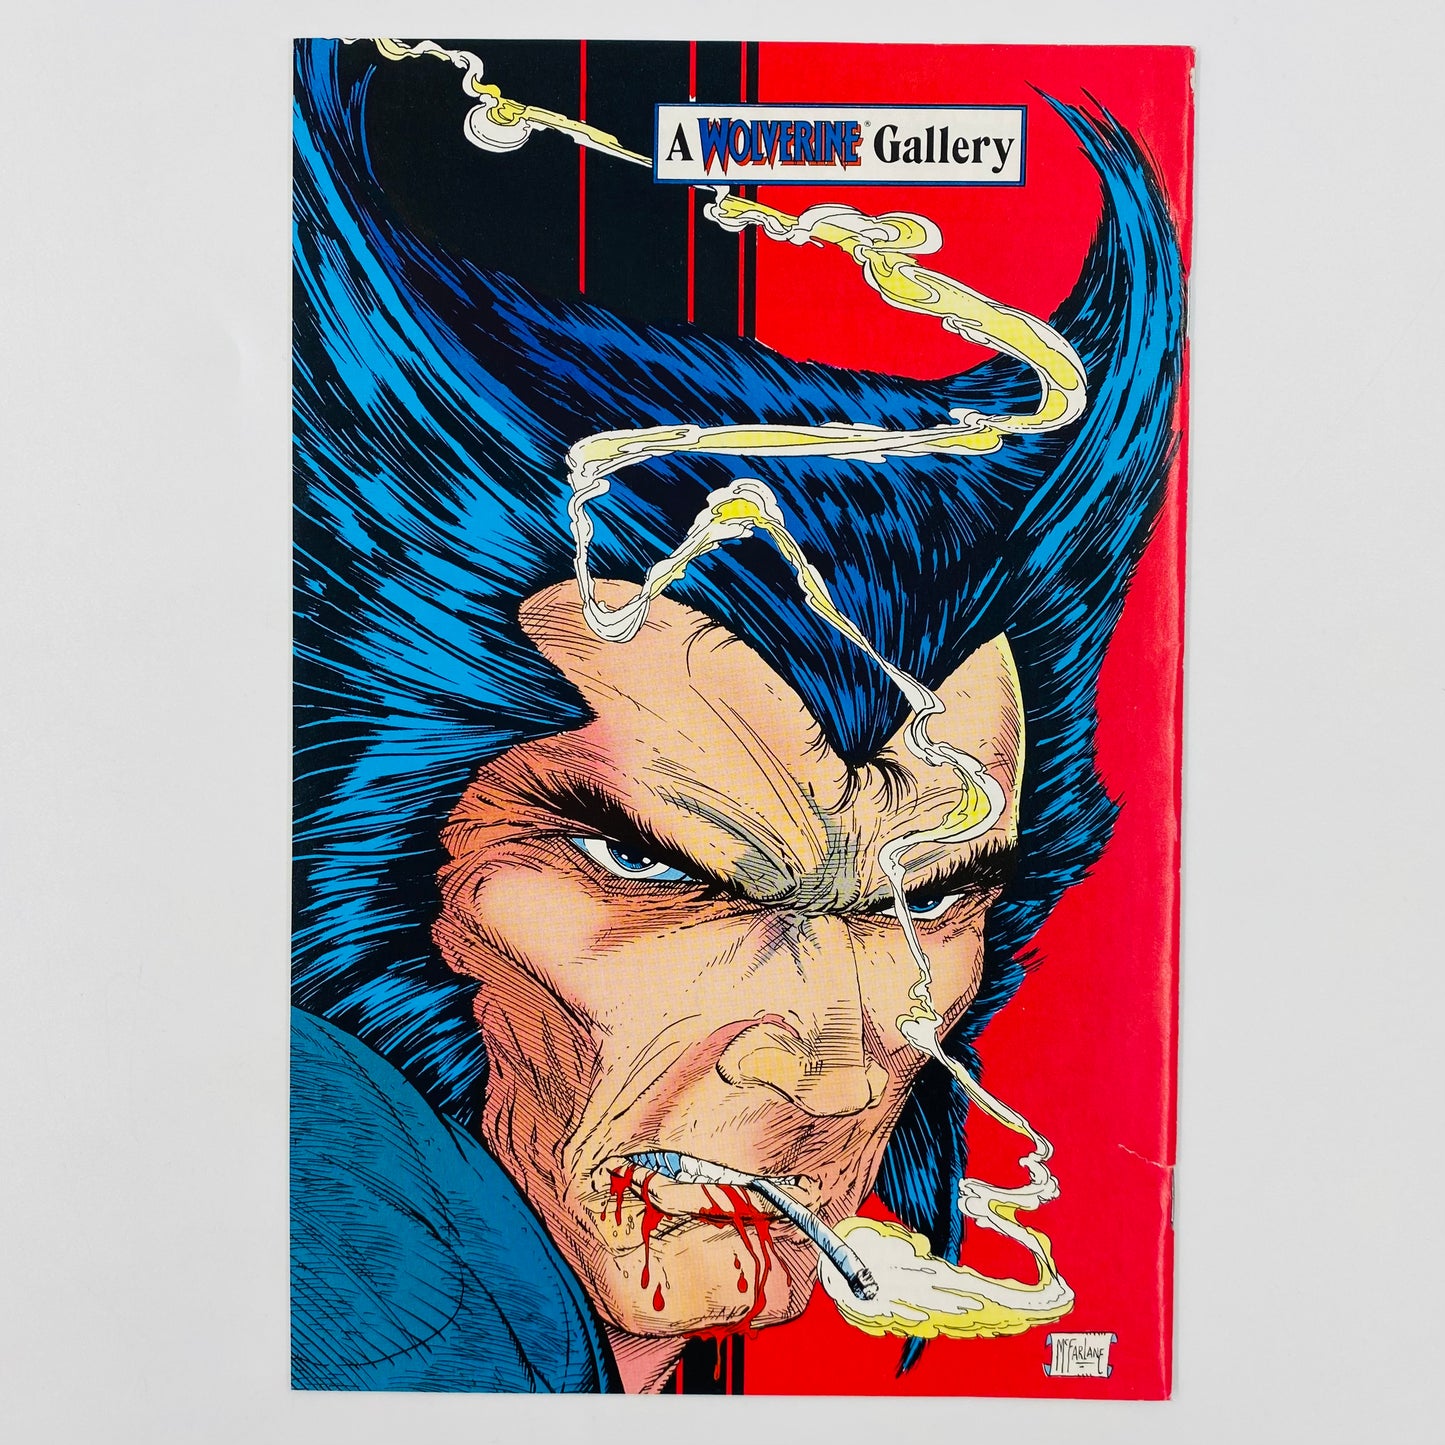 Wolverine #6 “Roughouse!" (1989) Marvel